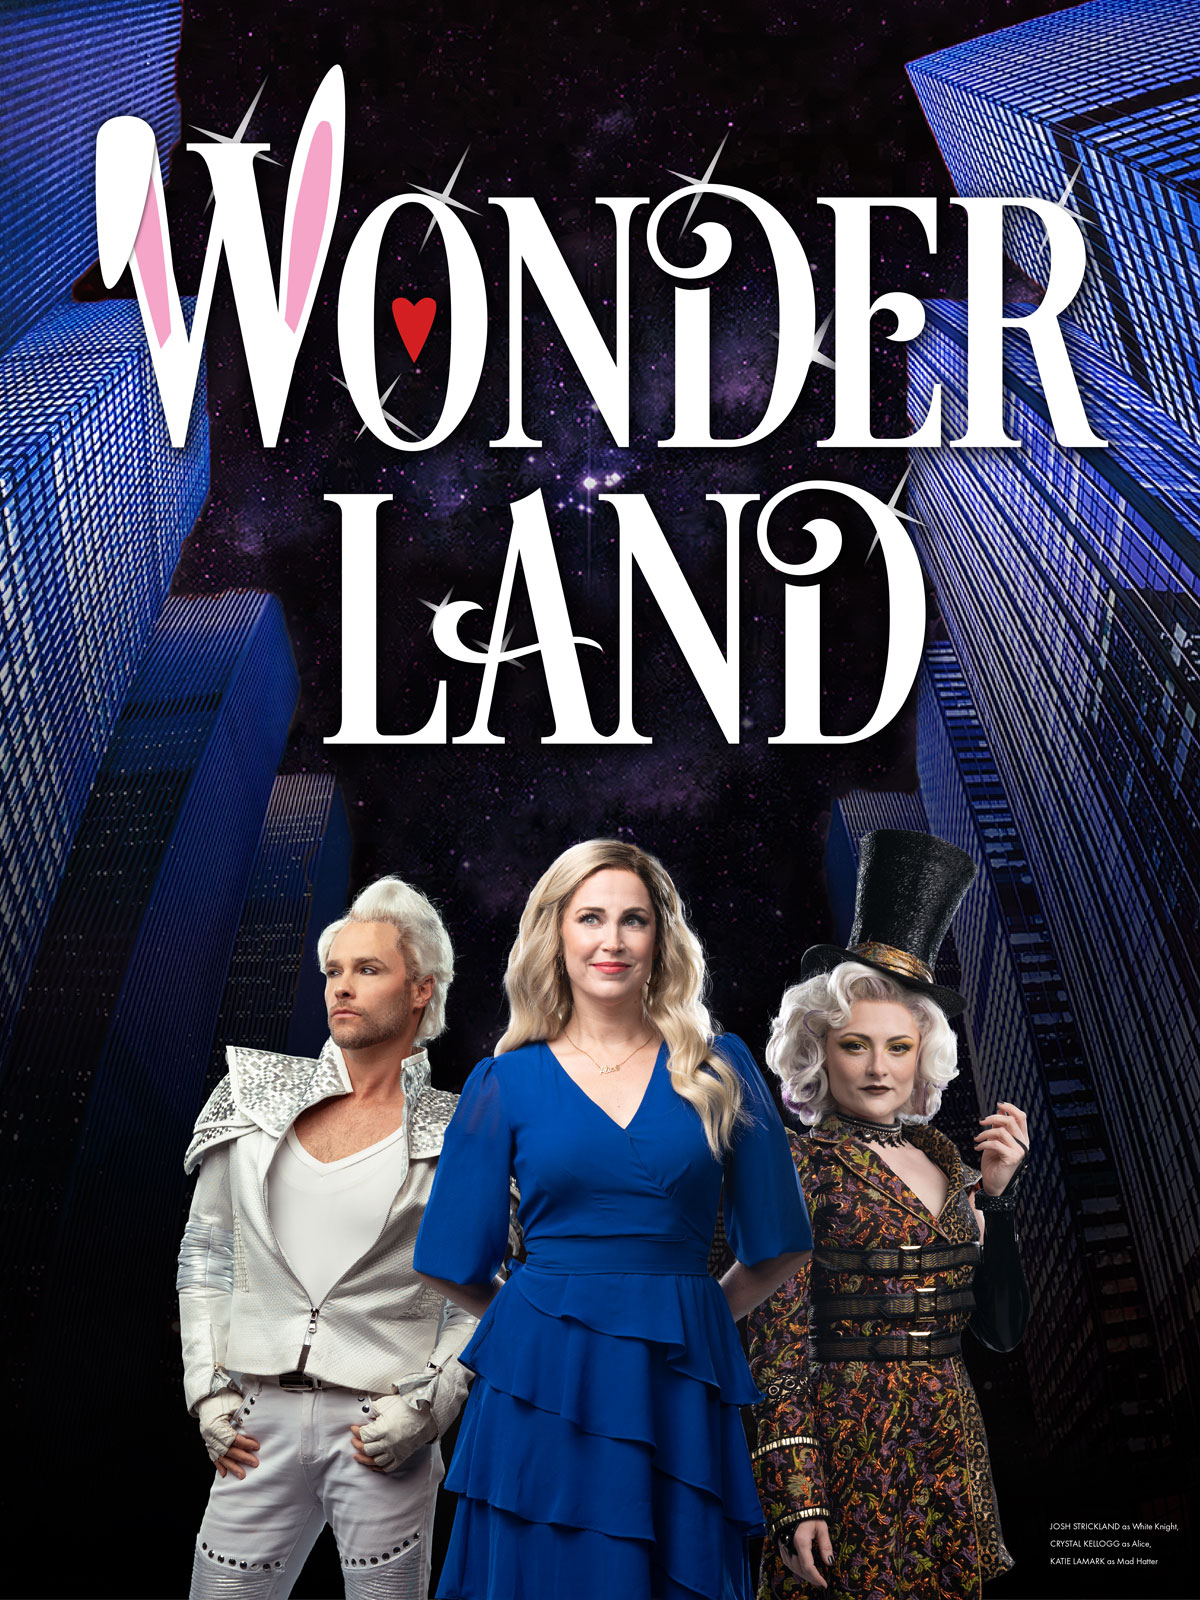 Wonderland with cast members